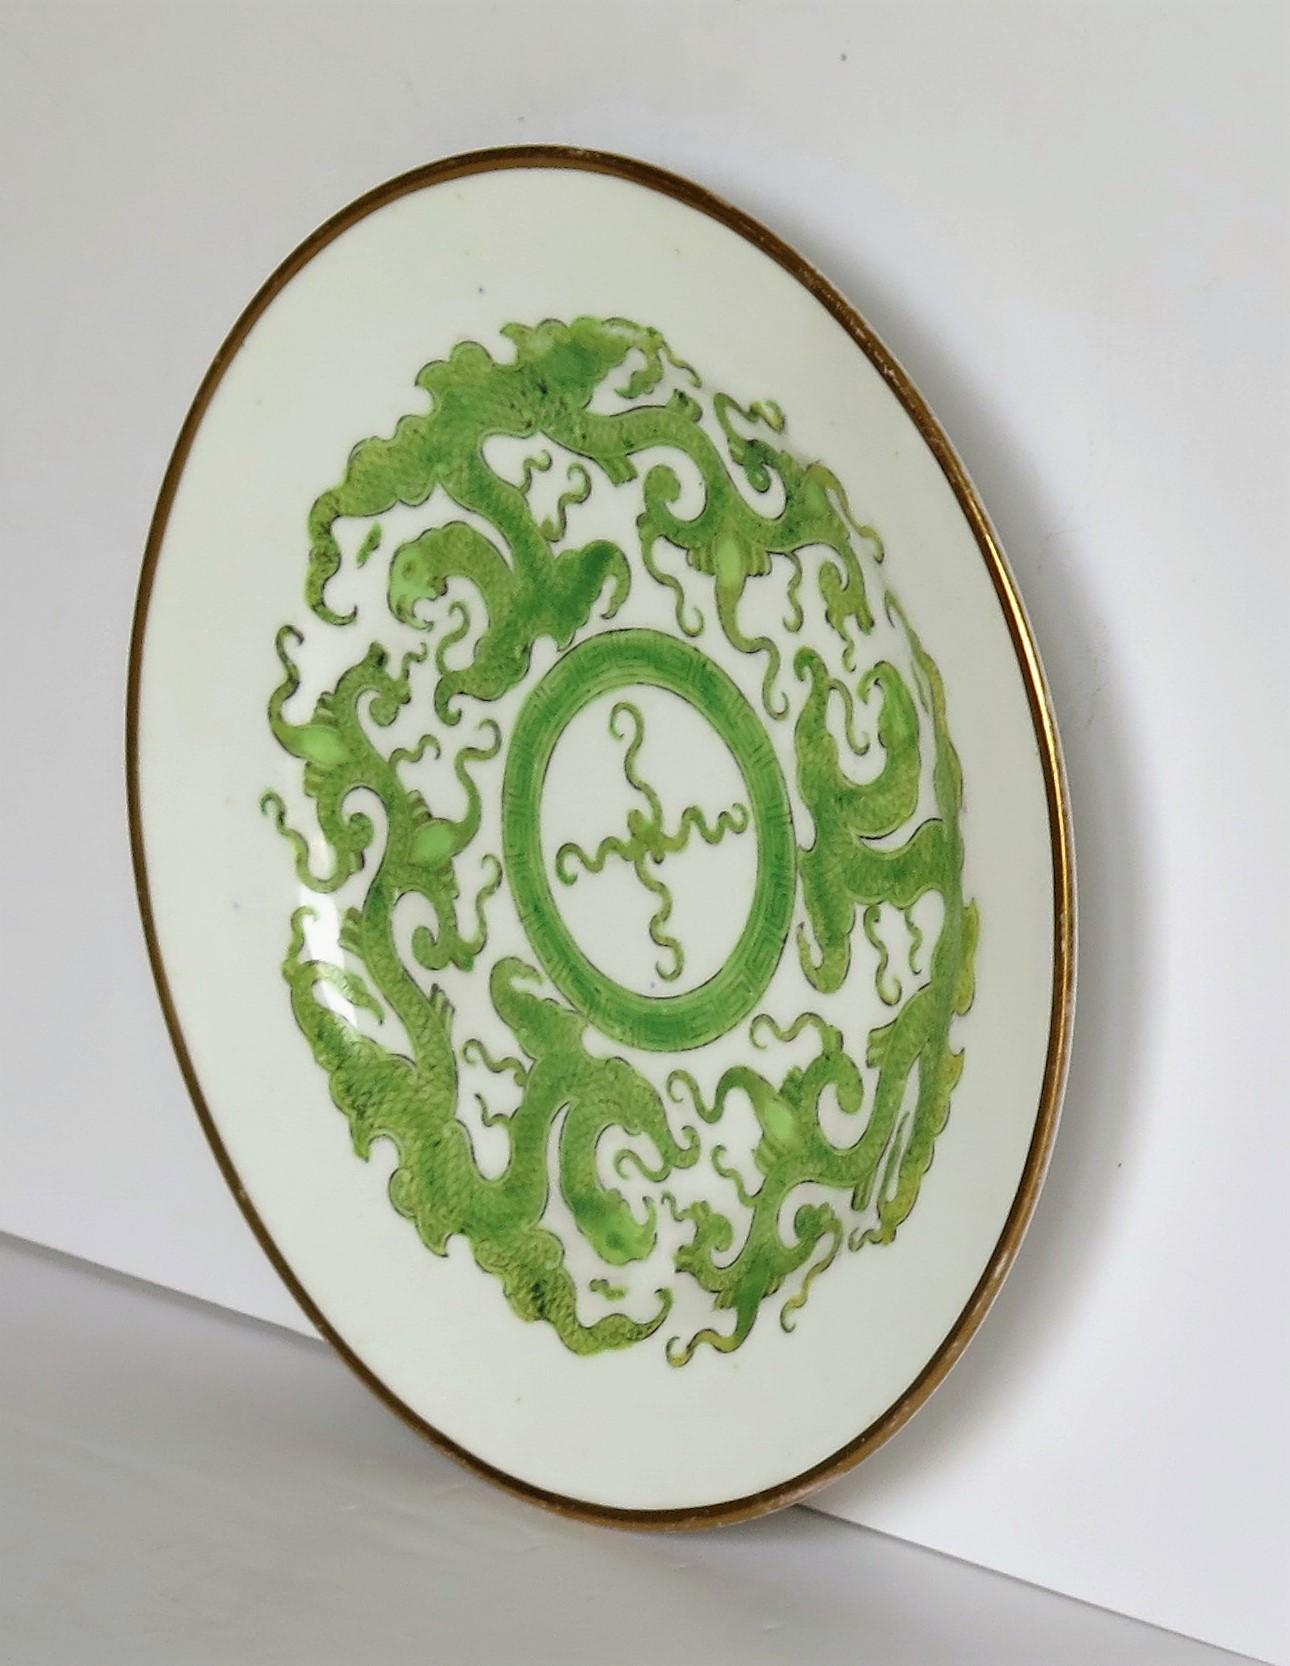 Hand-Painted Georgian Miles Mason Porcelain Plate in Green Chinese Dragon Pattern, circa 1808